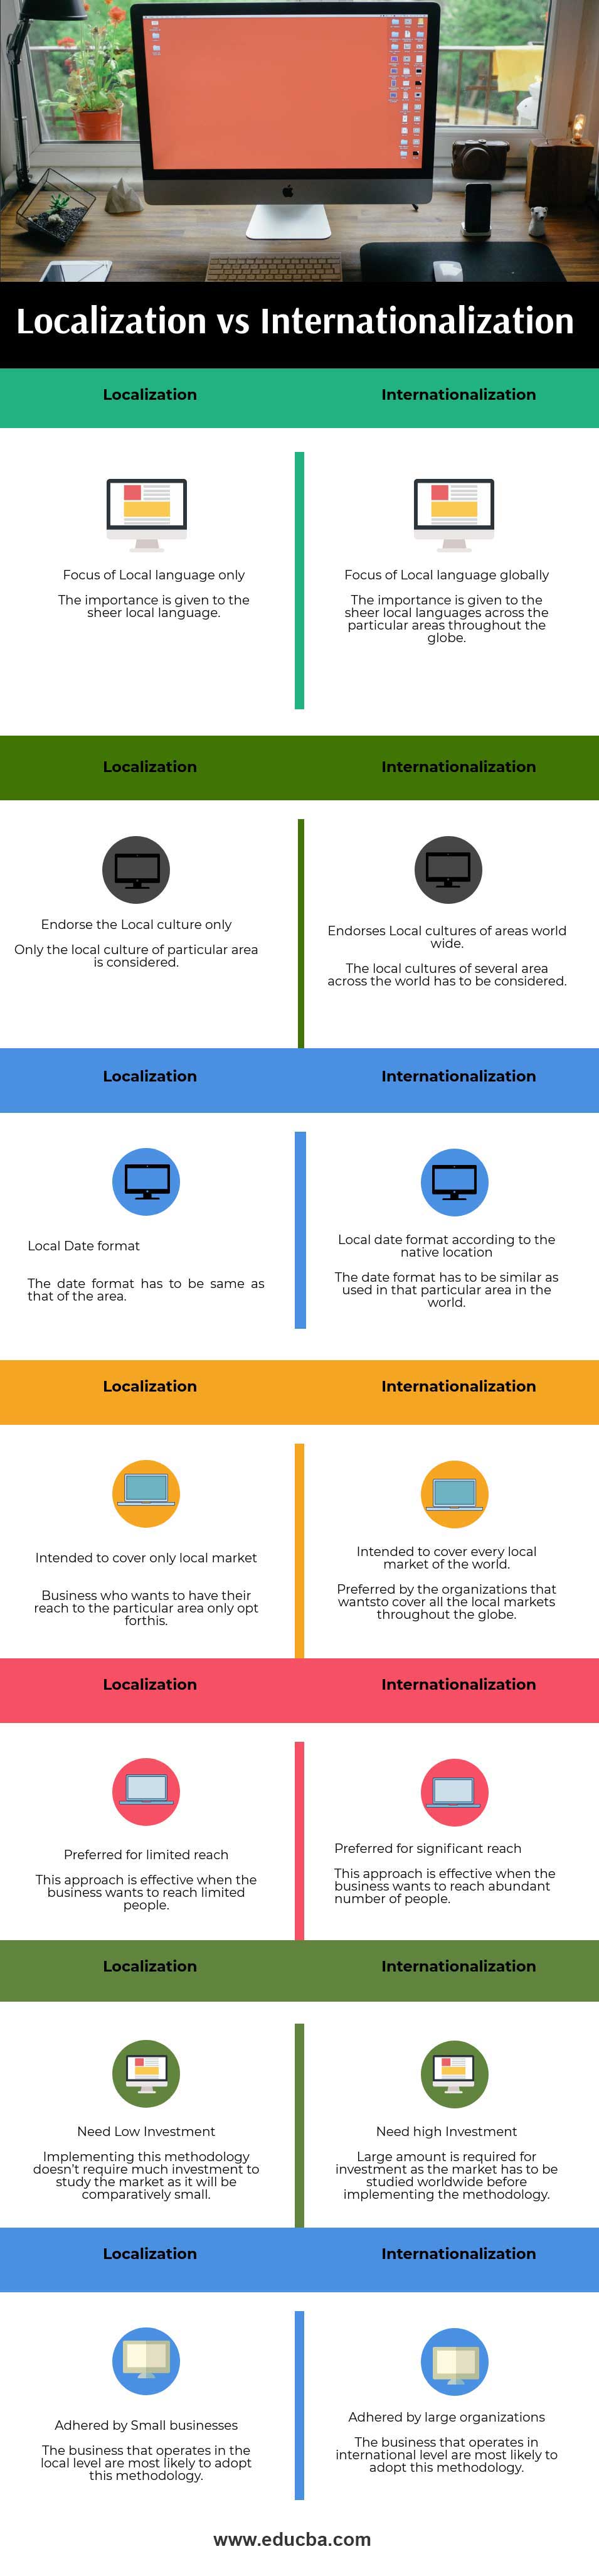 Localization vs Internationalization info